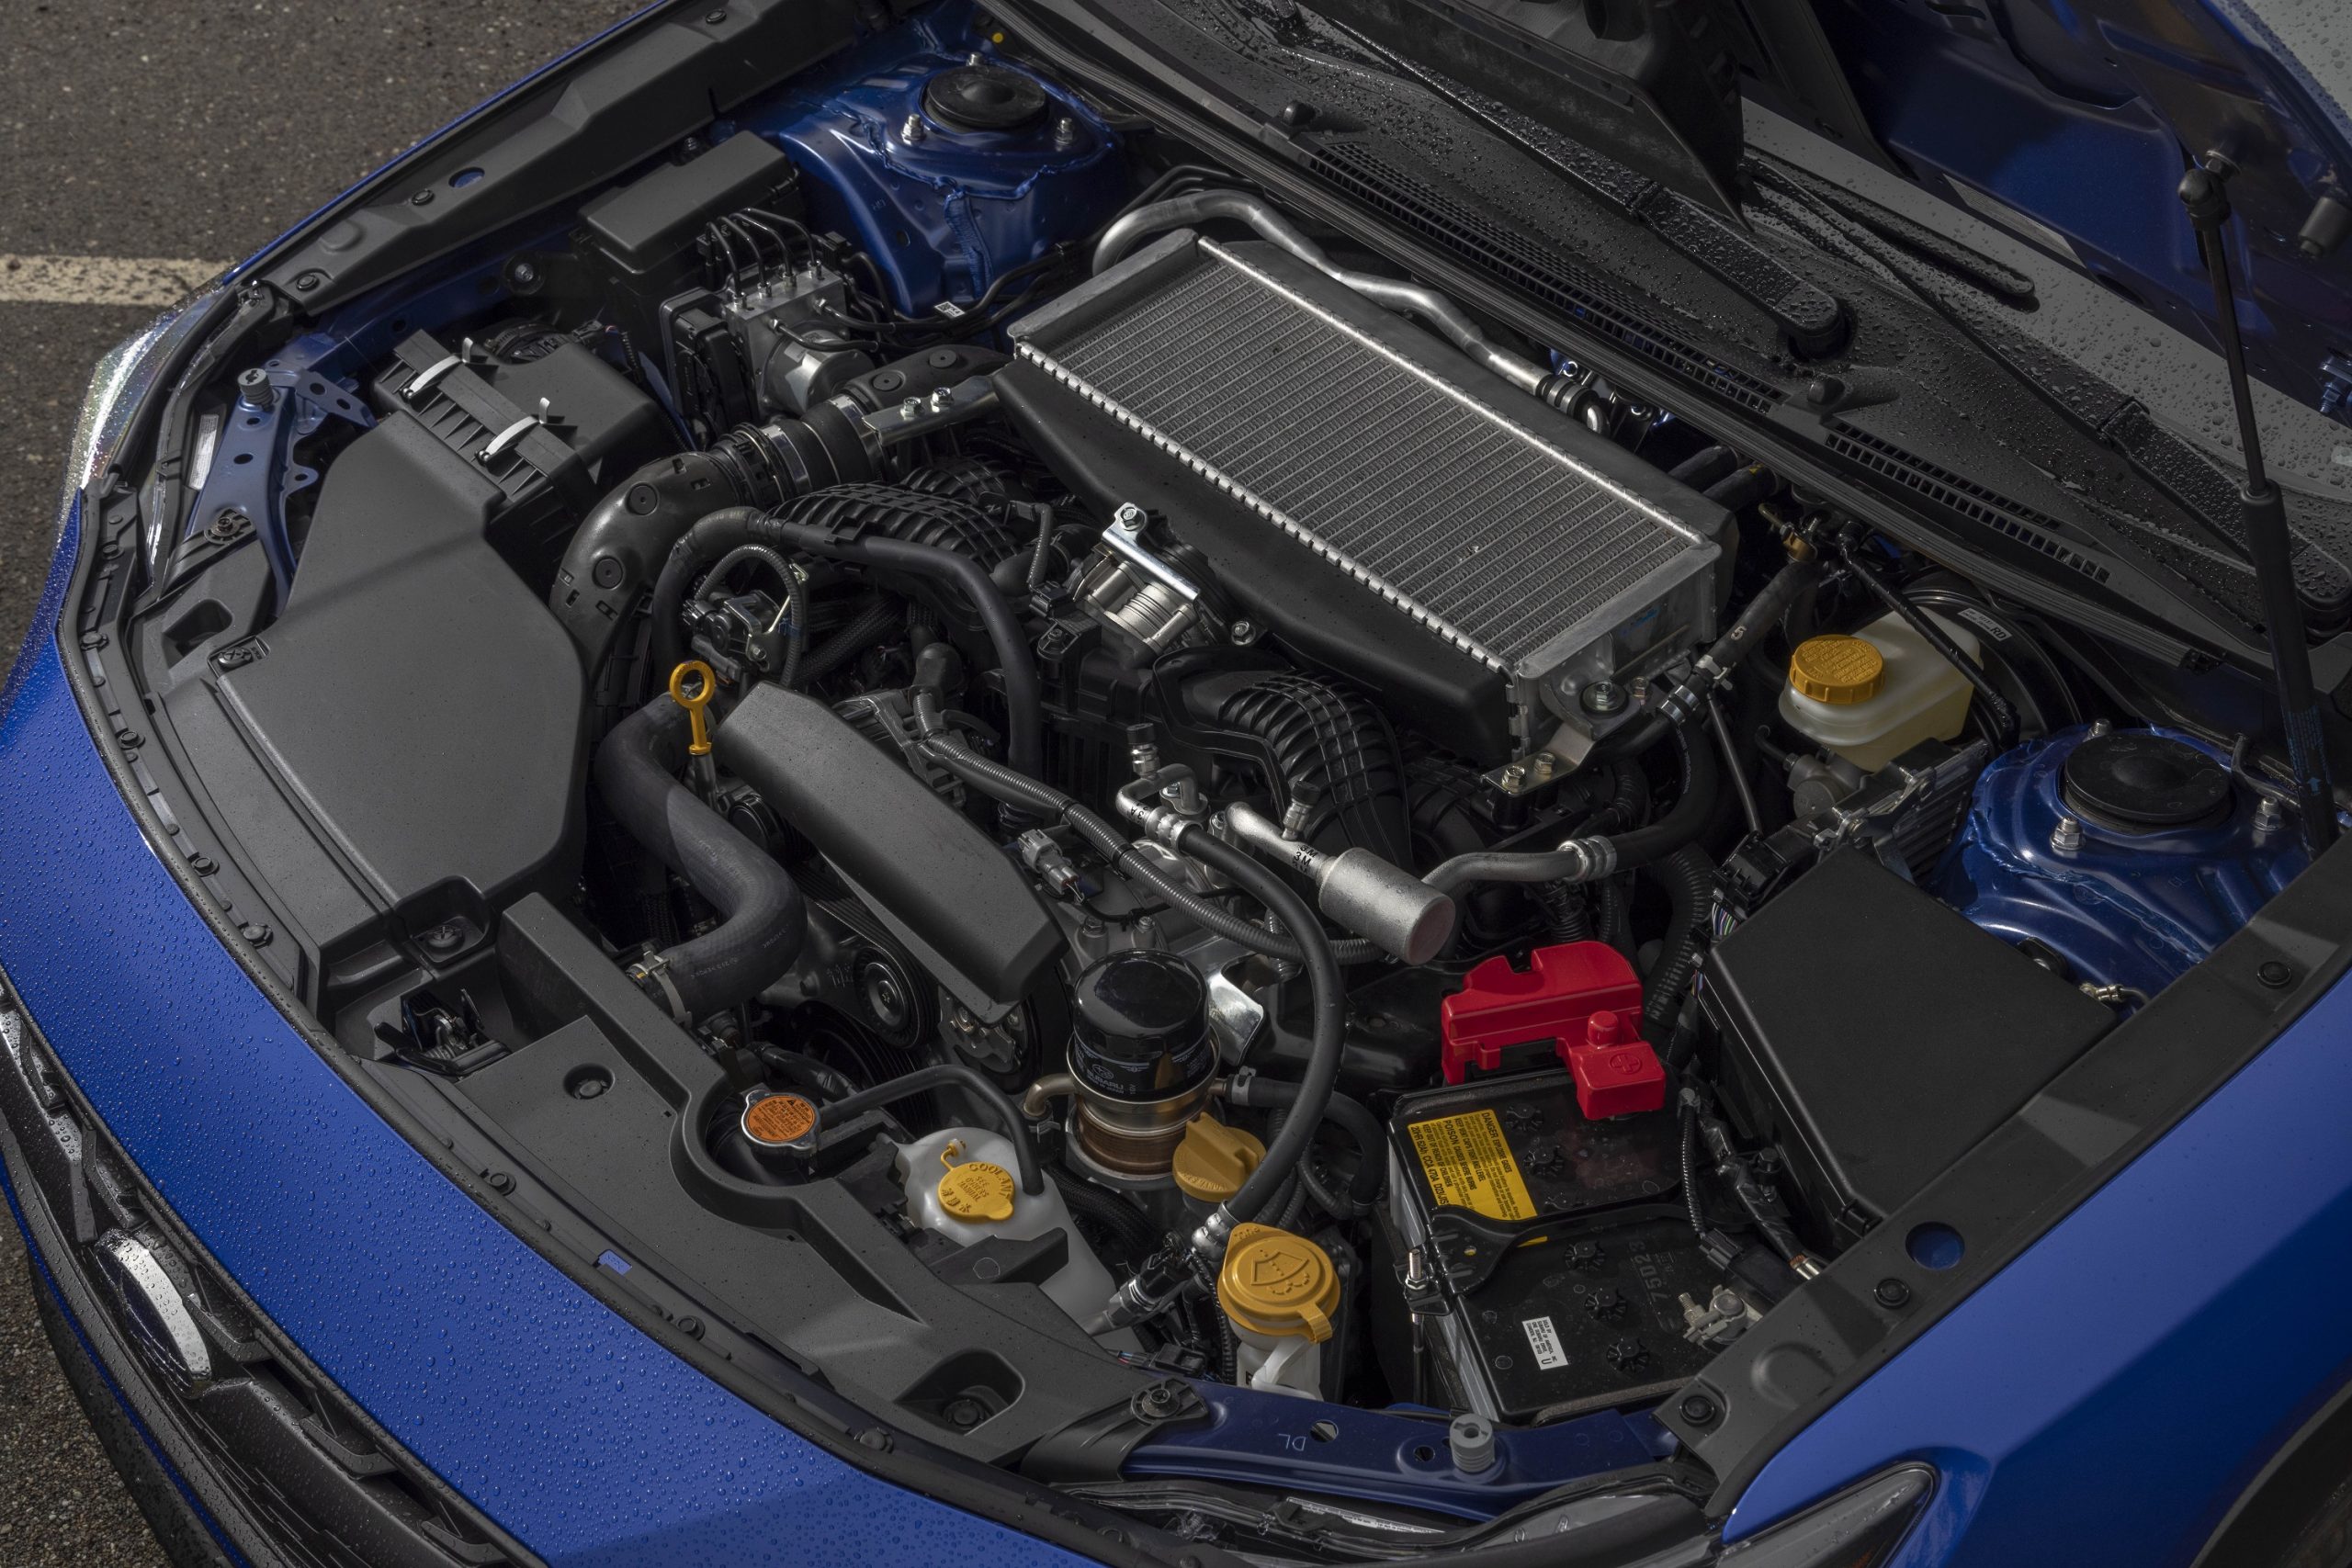 The 2.4L engine of the new Subaru WRX